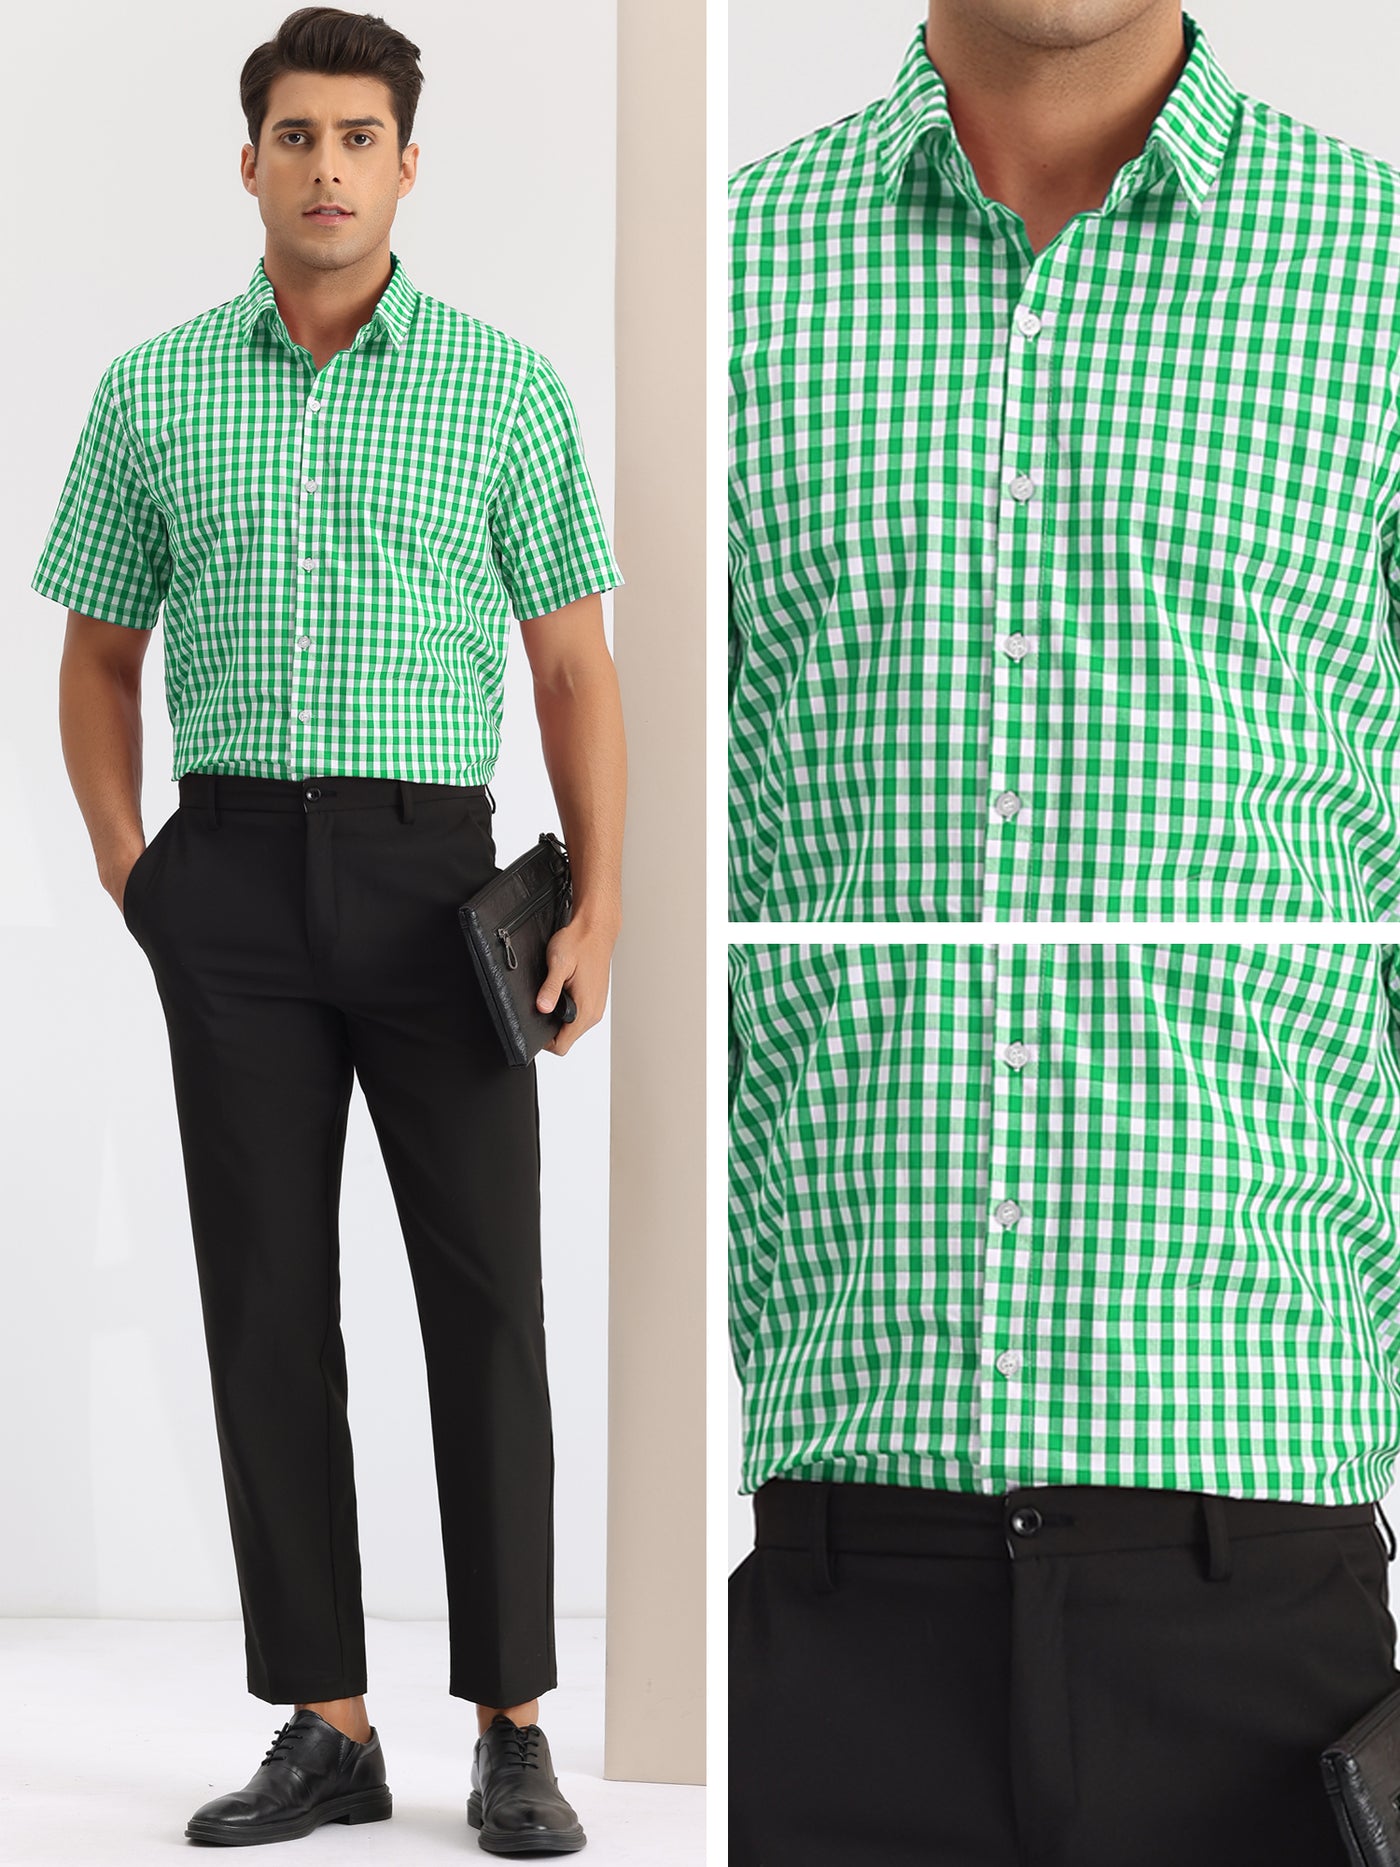 Bublédon Checks Dress Shirts for Men's Short Sleeves Formal Plaid Shirt